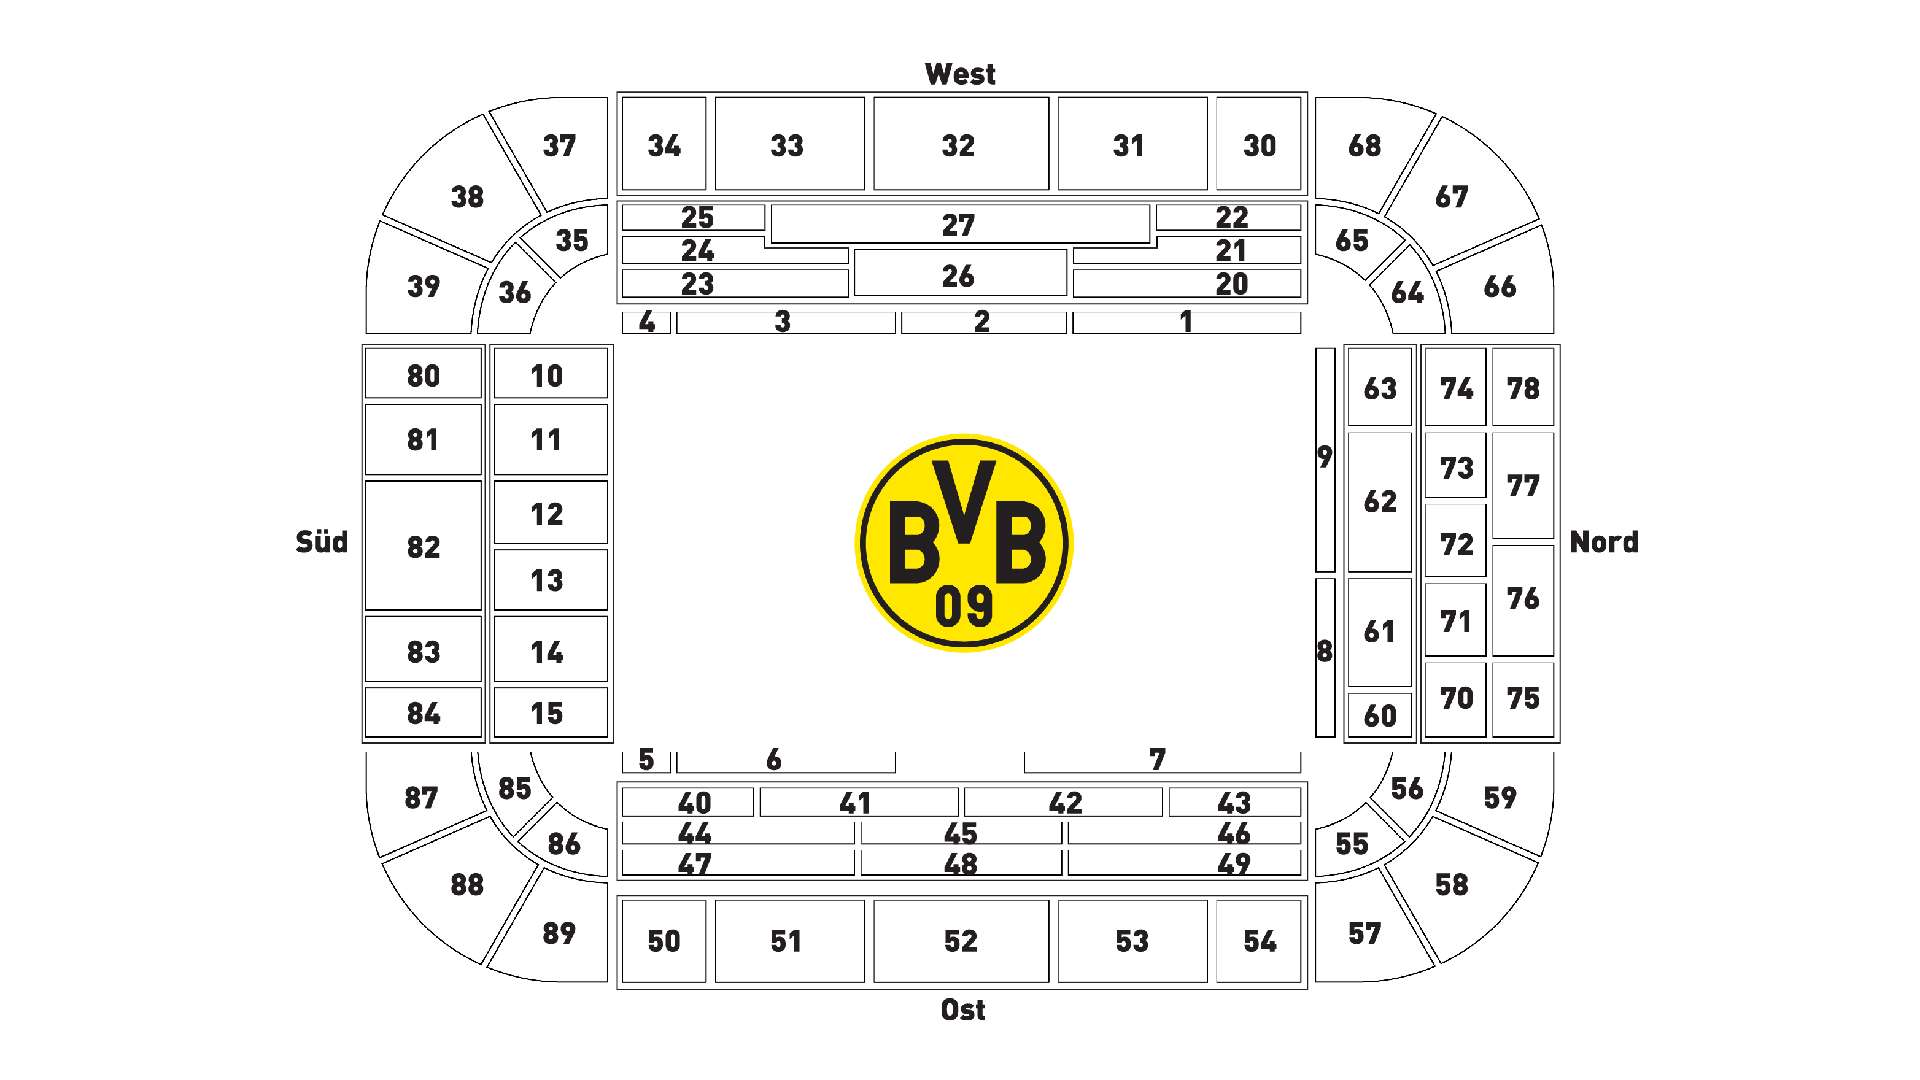 Faninfos zum Auswärtsspiel bei Borussia Dortmund | Bayer04.de